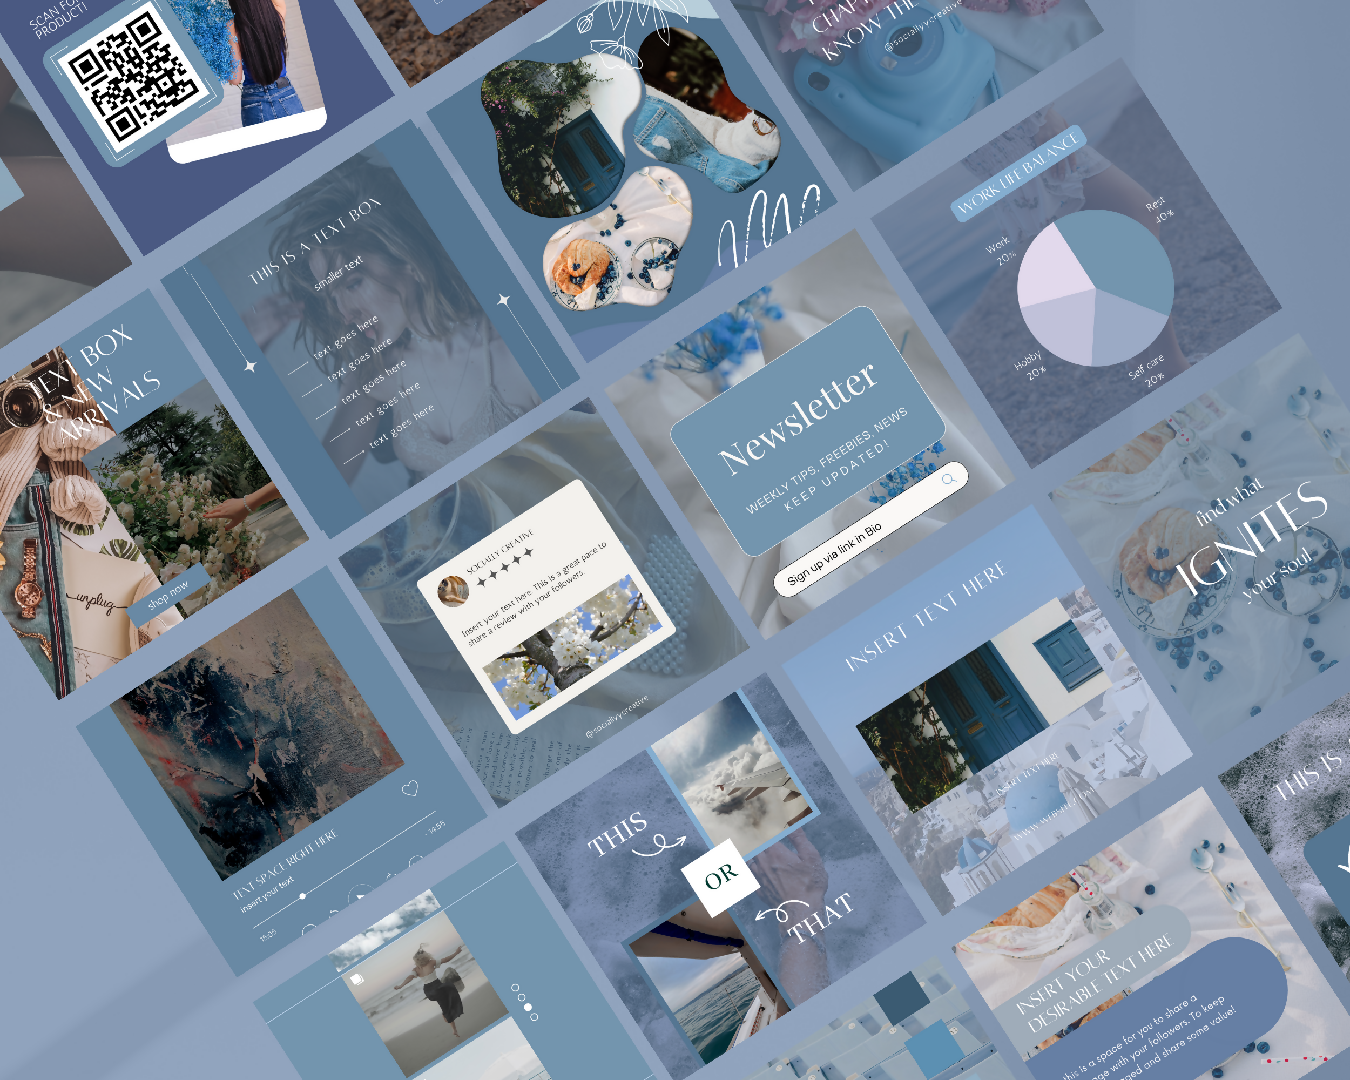 250 Blue Social Media Templates, Ocean Tropical Blue Instagram Canva Templates